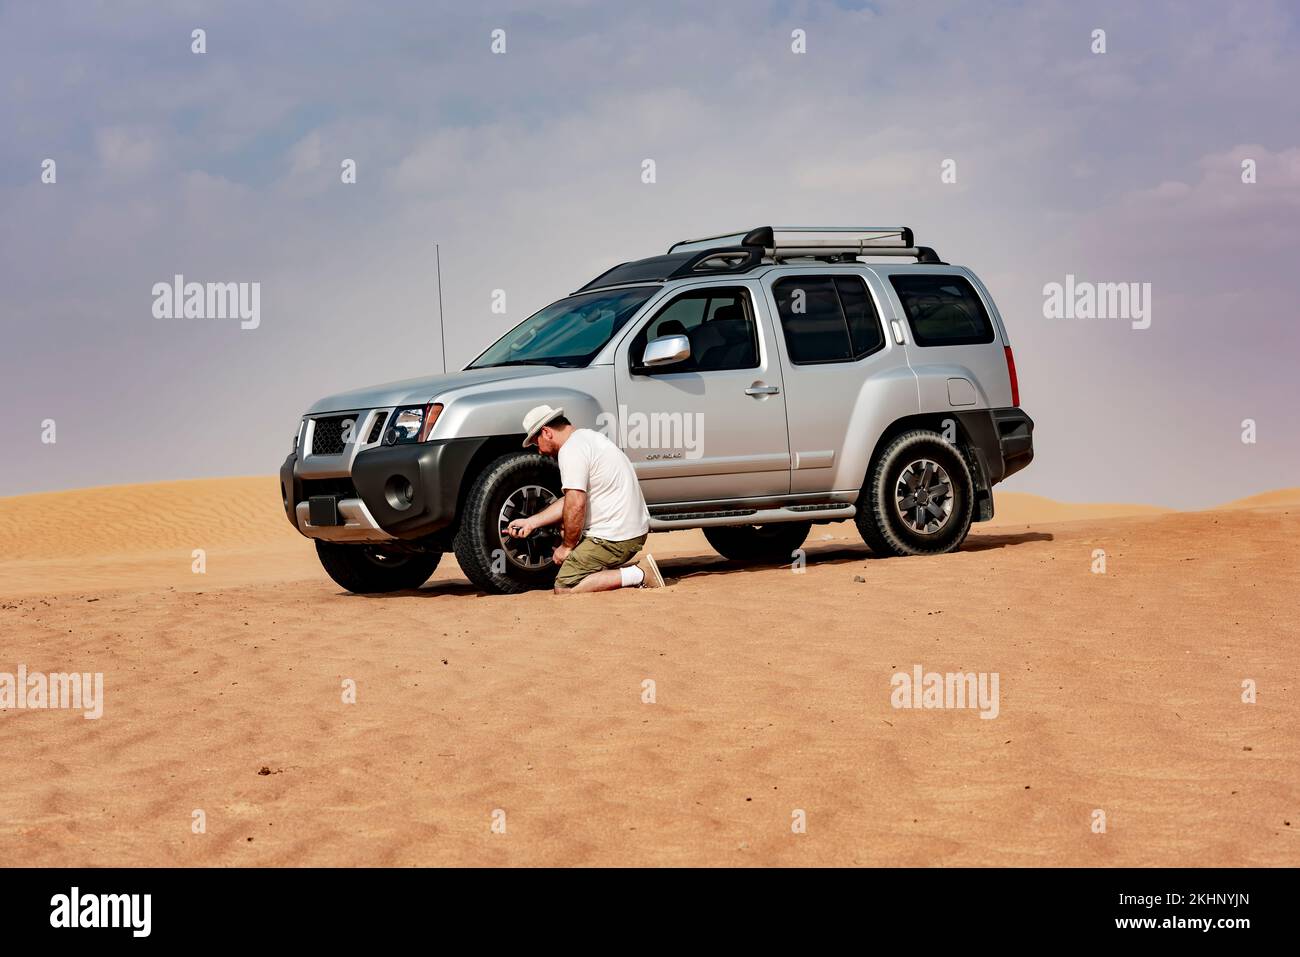 Man deflates tires for safe dune driving in vast desert, off-road adventure Stock Photo